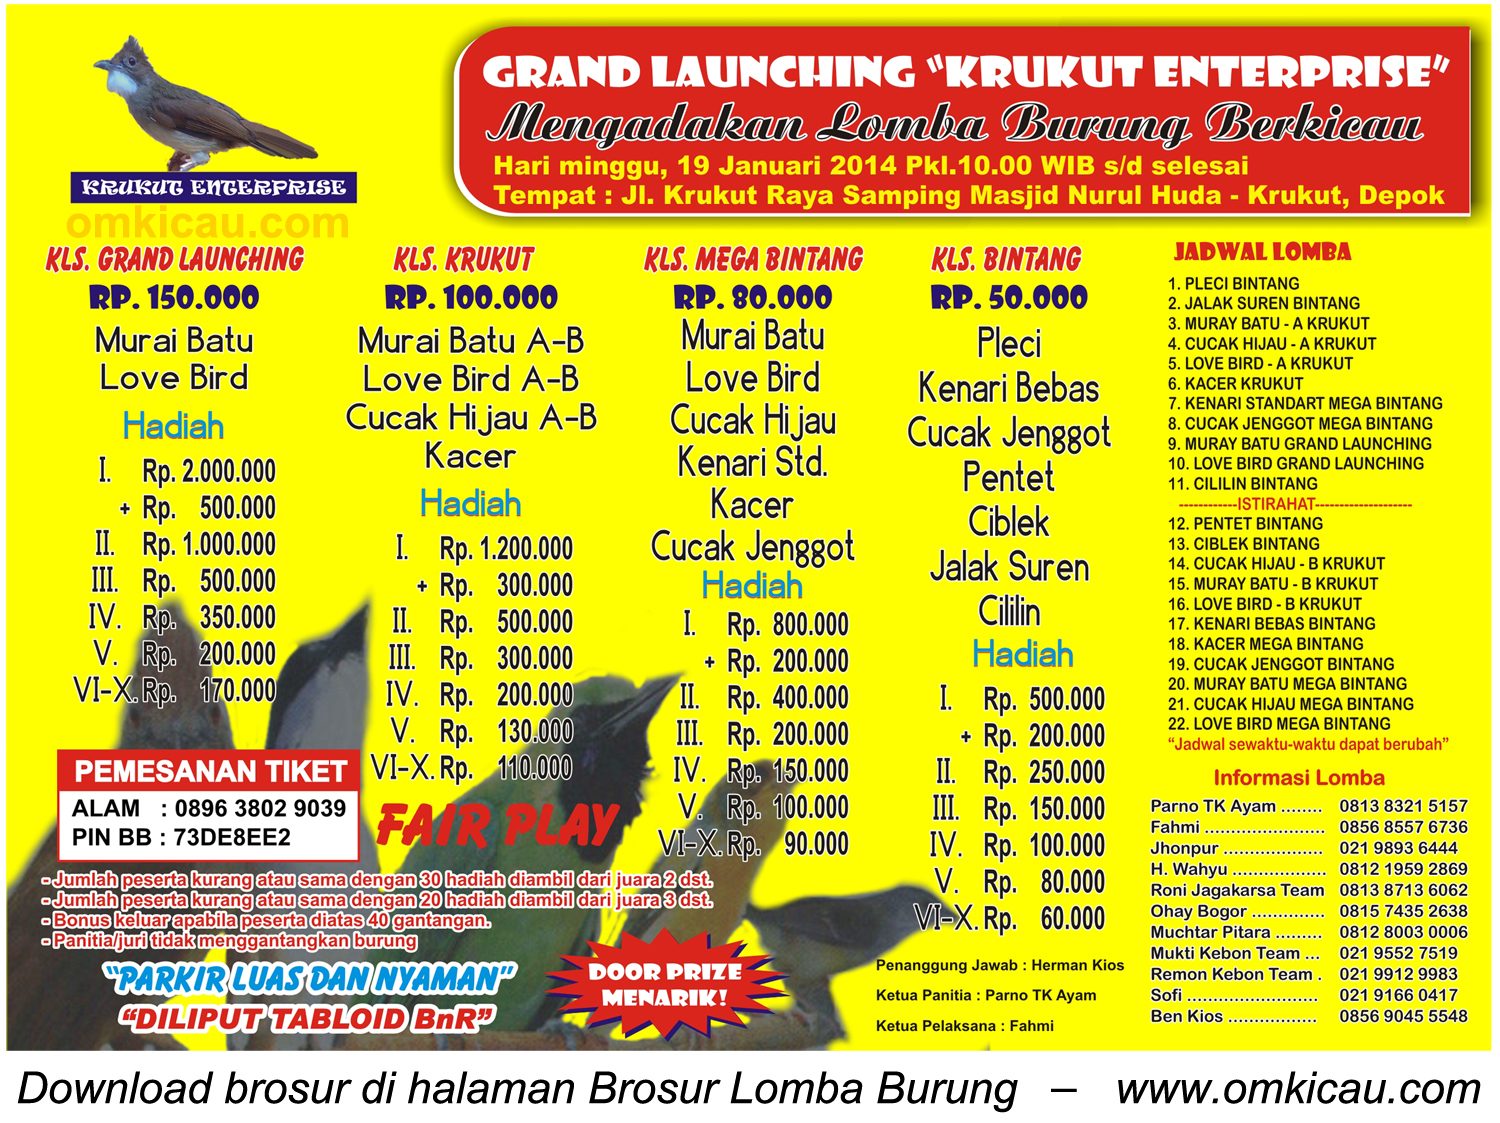 Brosur Lomba Burung Grand Launching Krukut Enterprise, Depok, 19 Januari 2014